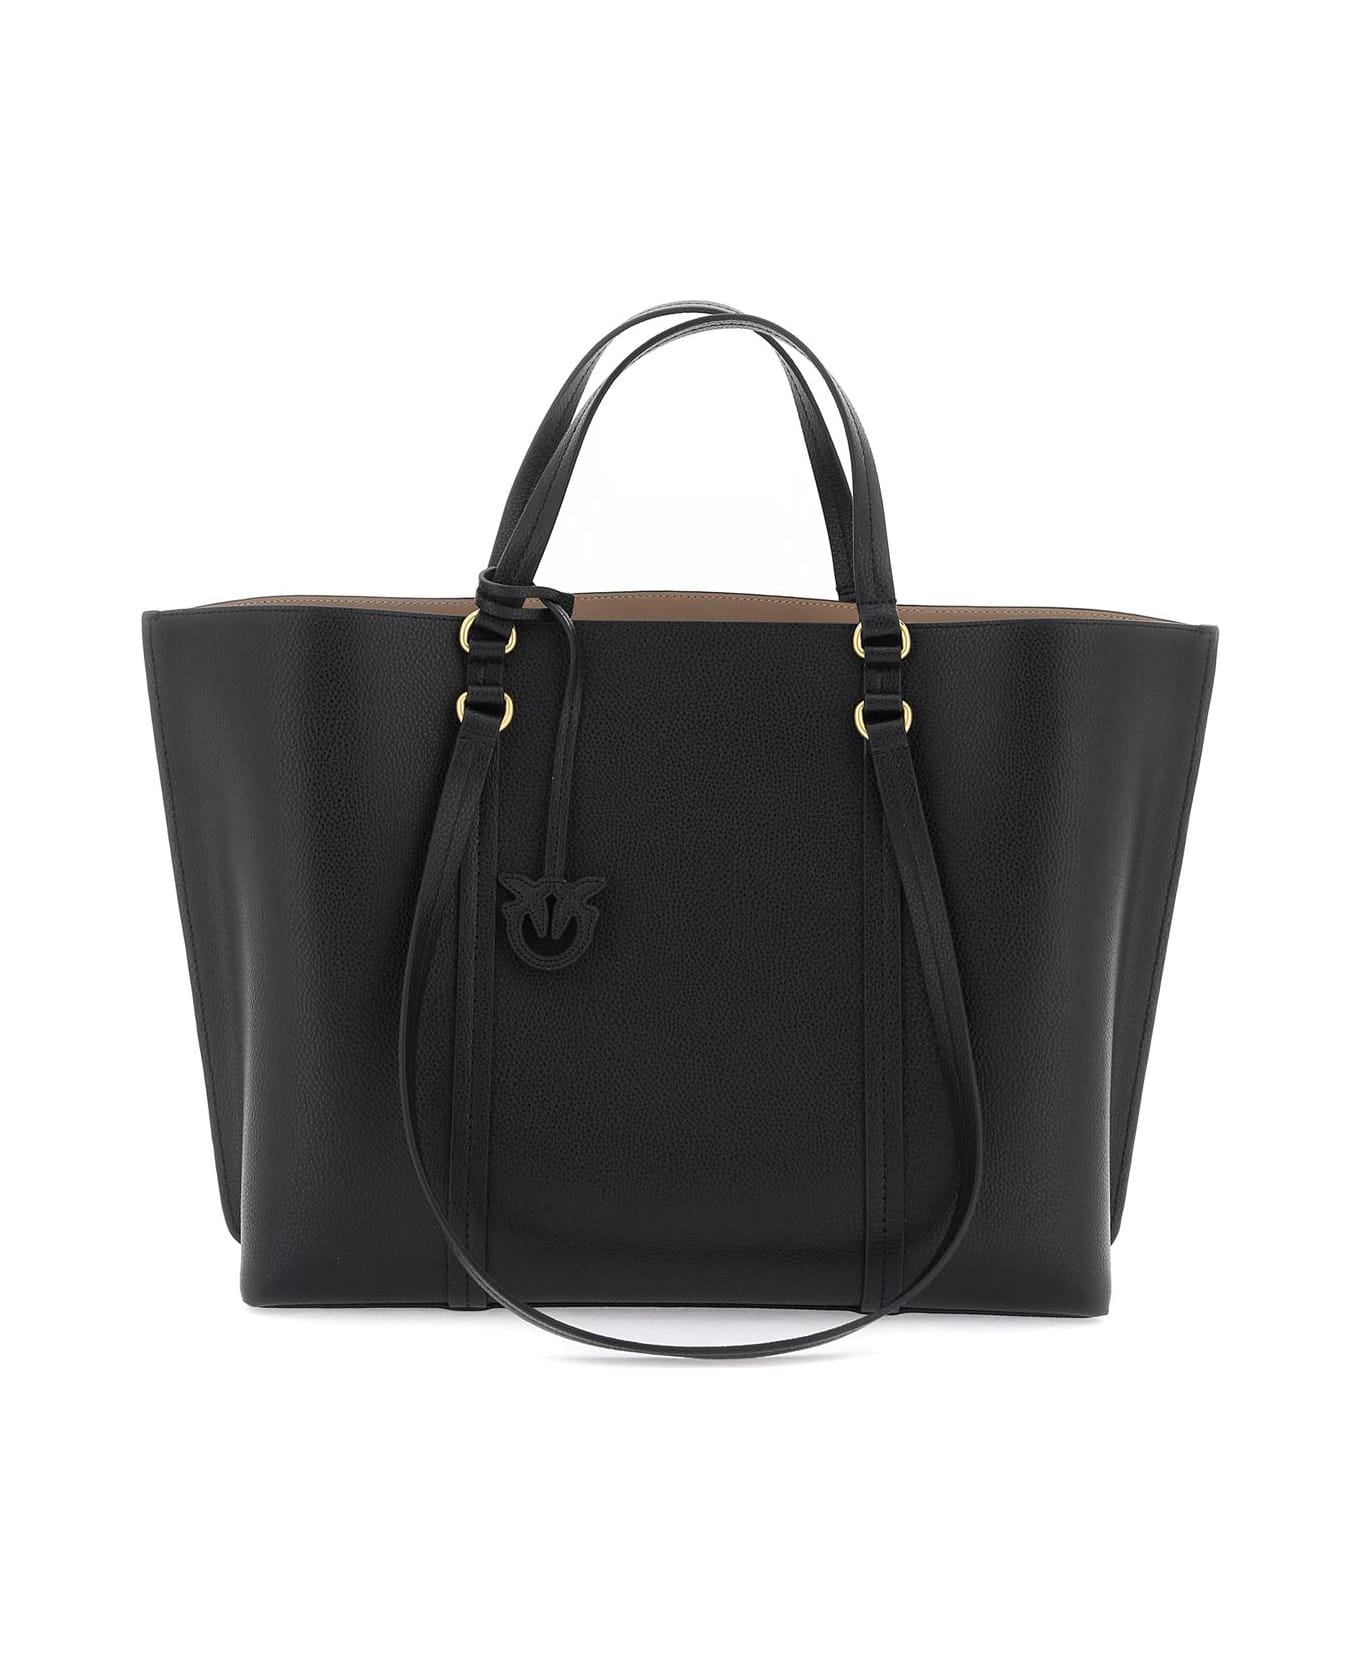 Pinko Large Leather Shopper Bag - NERO ANTIQUE GOLD (Black)